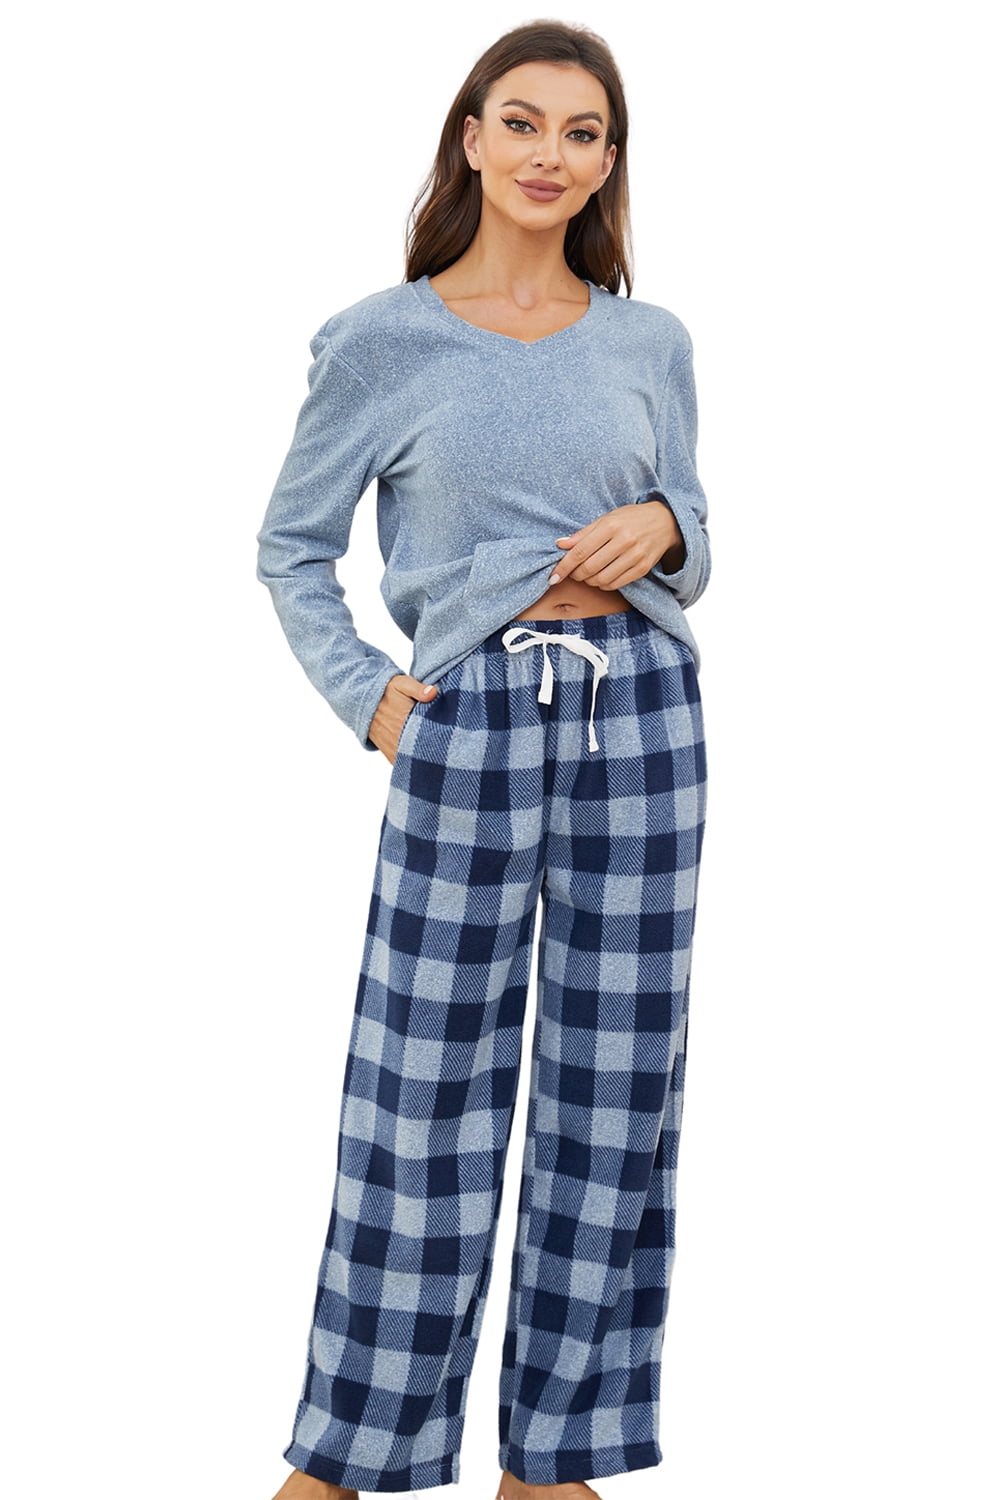 U2SKIIN Couple Pajama Sets, Plaid Matching Pajama Set for Men and Women  Soft Warm Pjs Set（Blue Mel./Navy-Blue Mel.Plaid Mens, X-Large） 